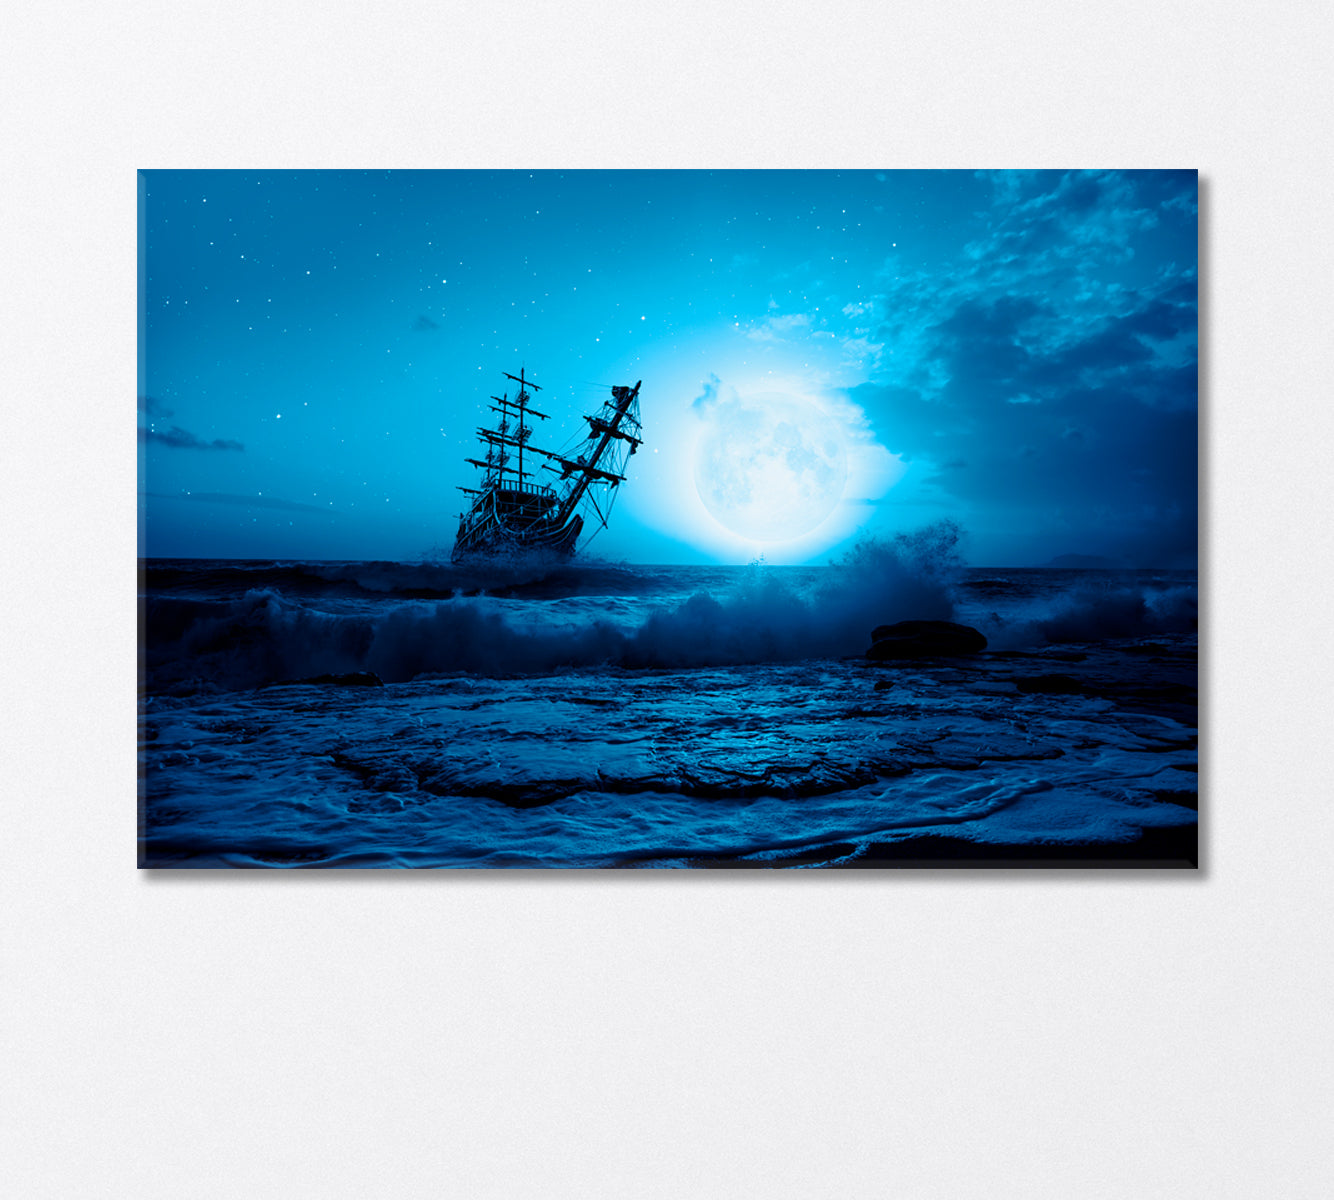 Sailing Old Ship in Stormy Sea at Night Canvas Print-Canvas Print-CetArt-1 Panel-24x16 inches-CetArt